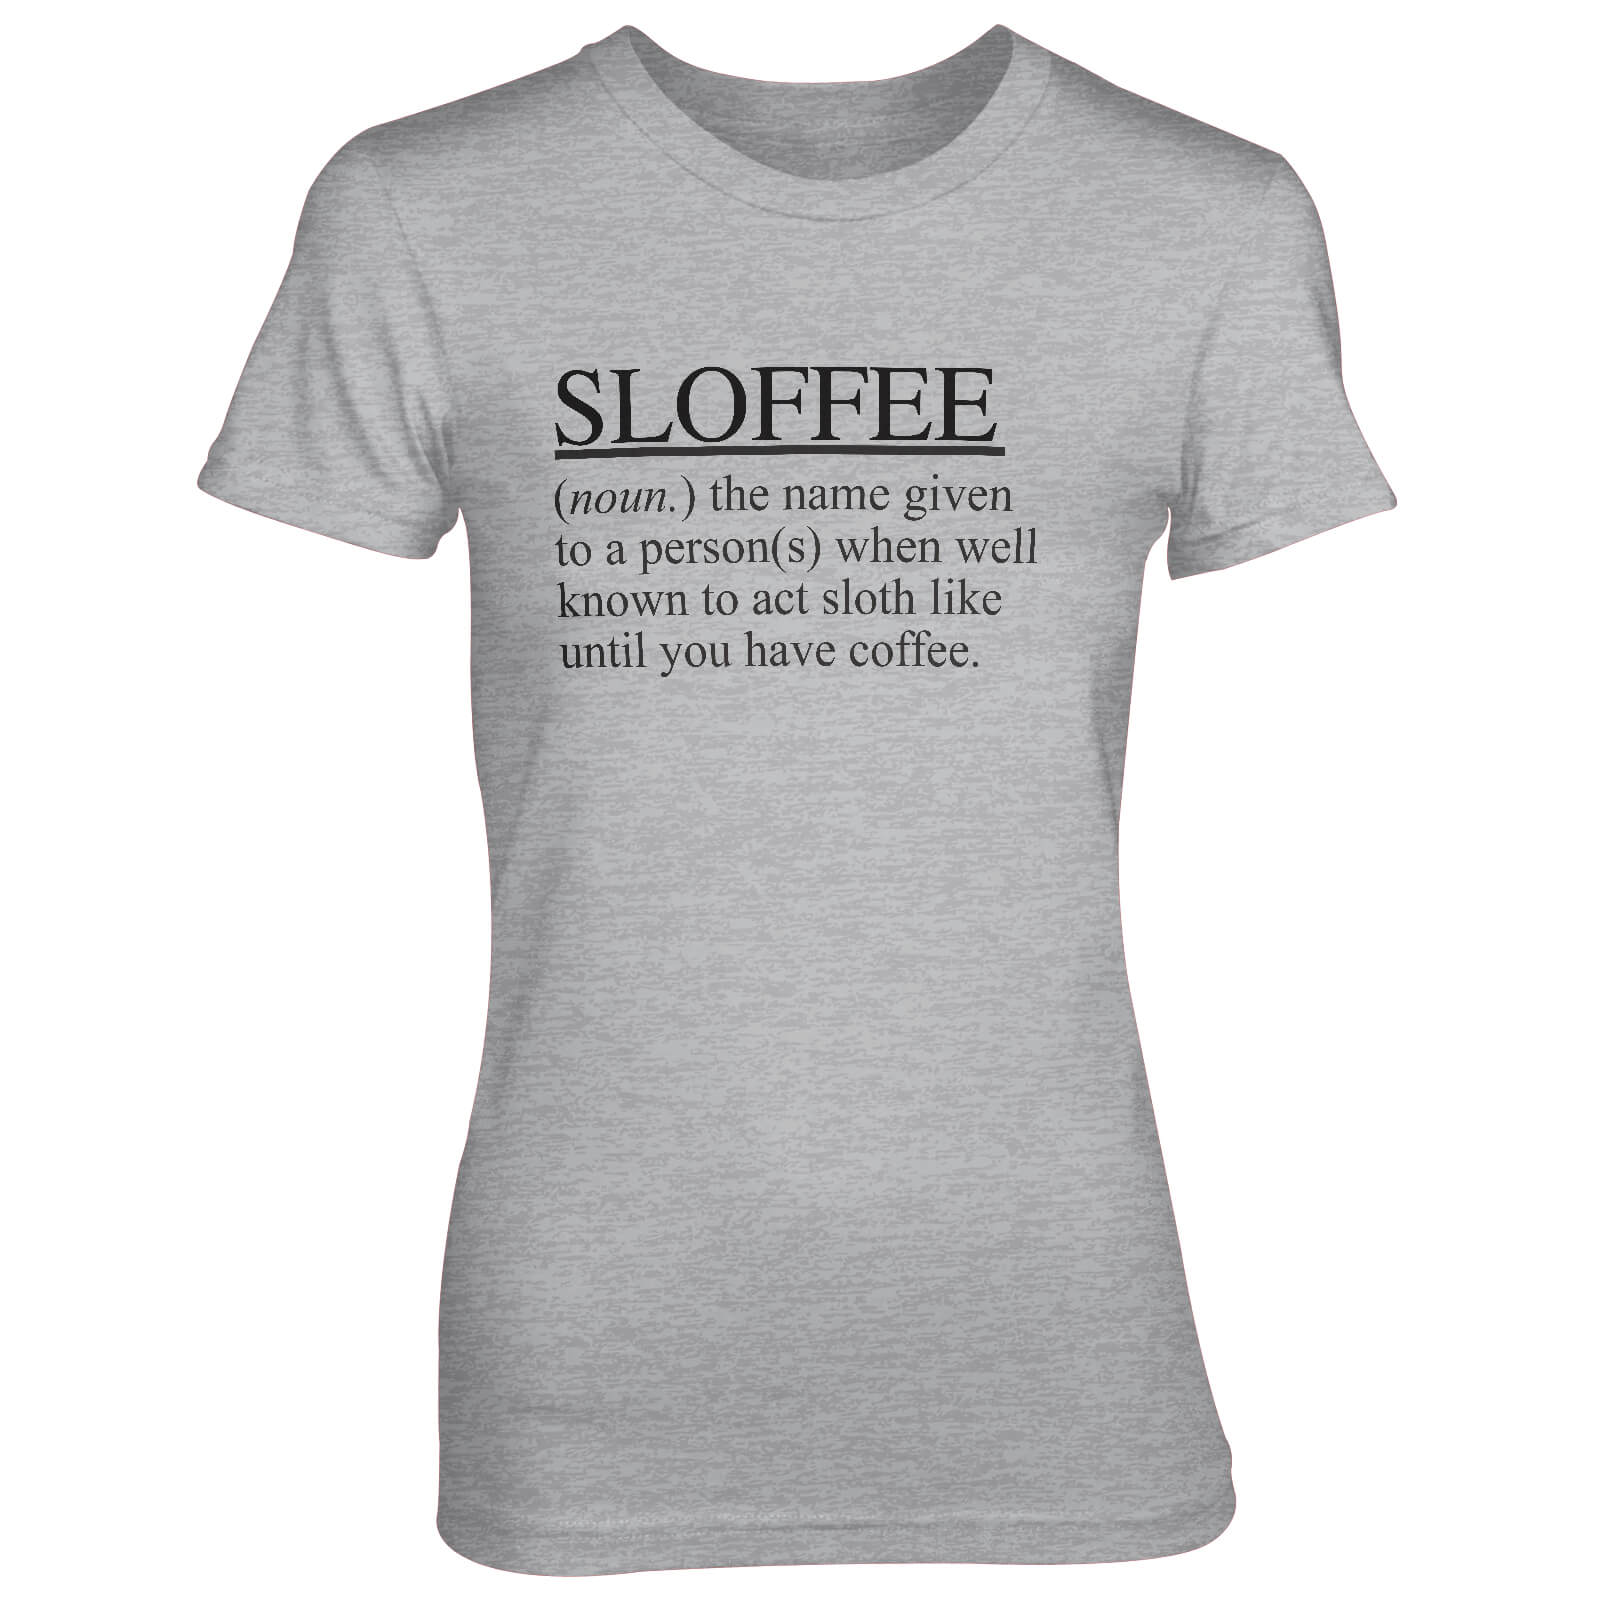 Sloffee Women's Grey T-Shirt - S - Grey